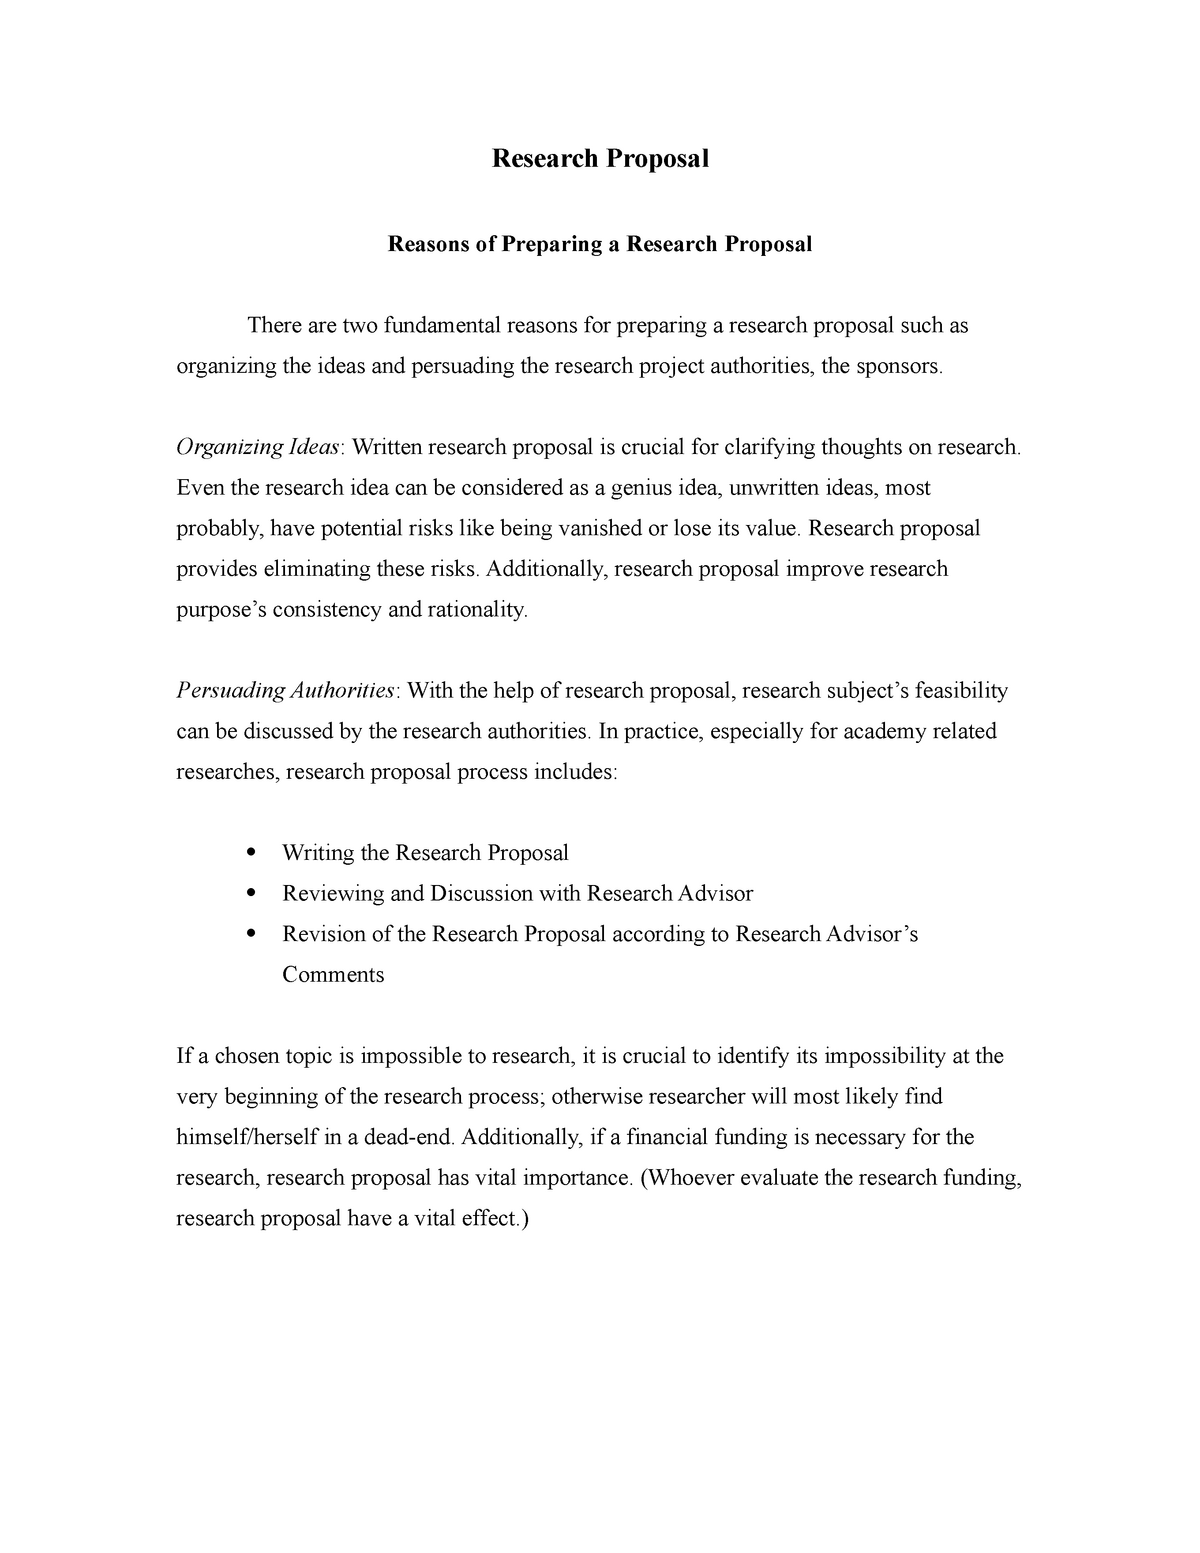 reasons for preparing research proposal